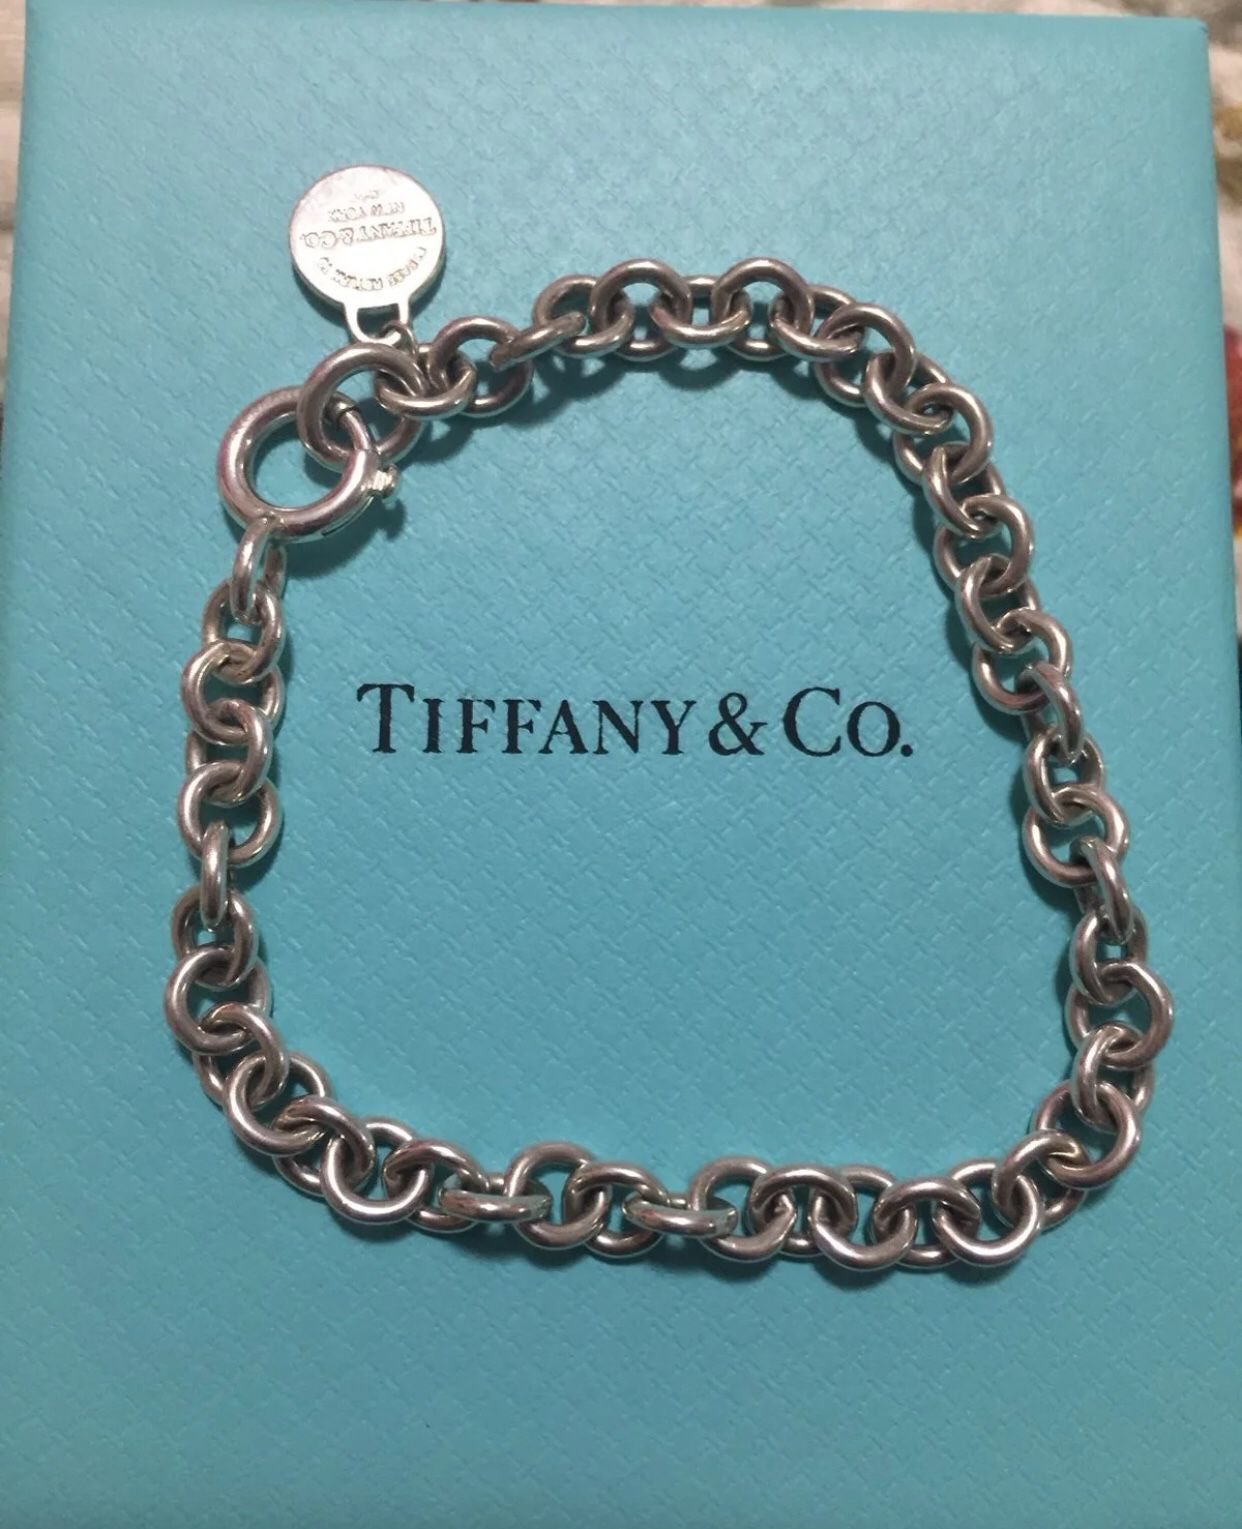 Tiffany & Co Authentic Bracelet Silver 925 Return to Tiffany New York charm